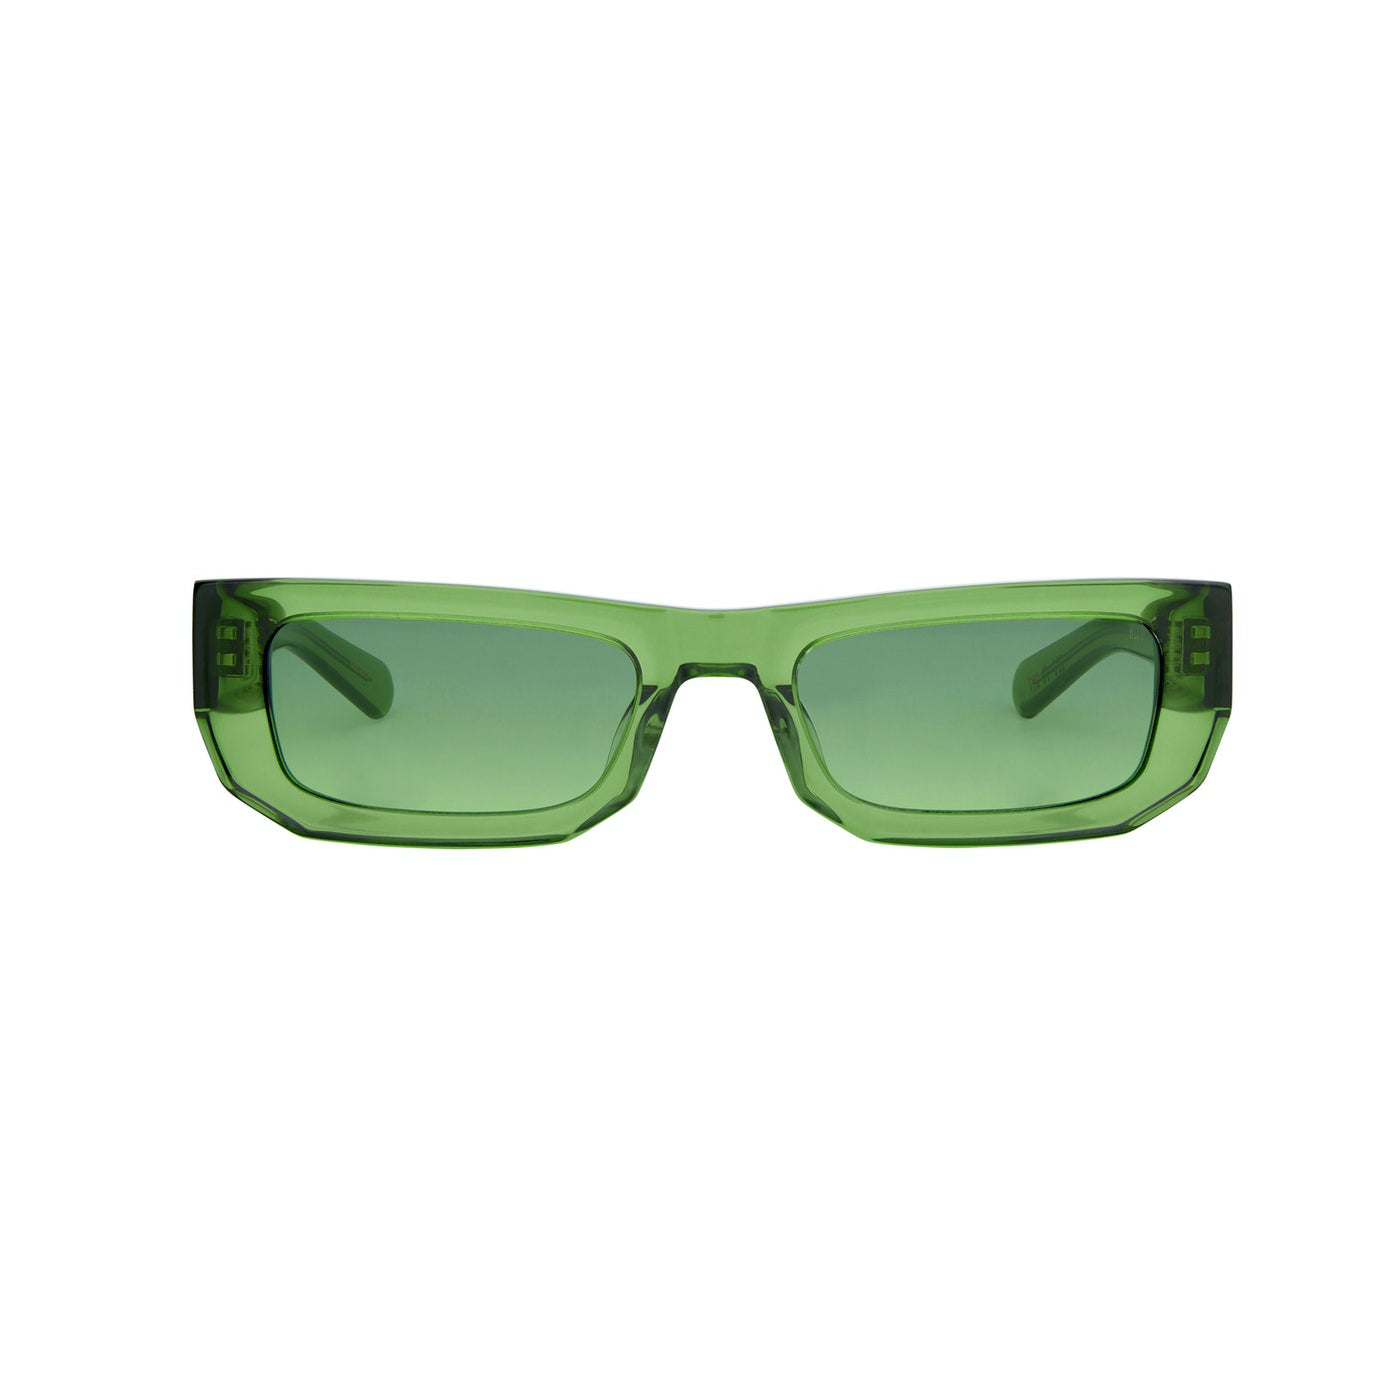 Bricktop - Solid Green / Solid Green Gradient Lens